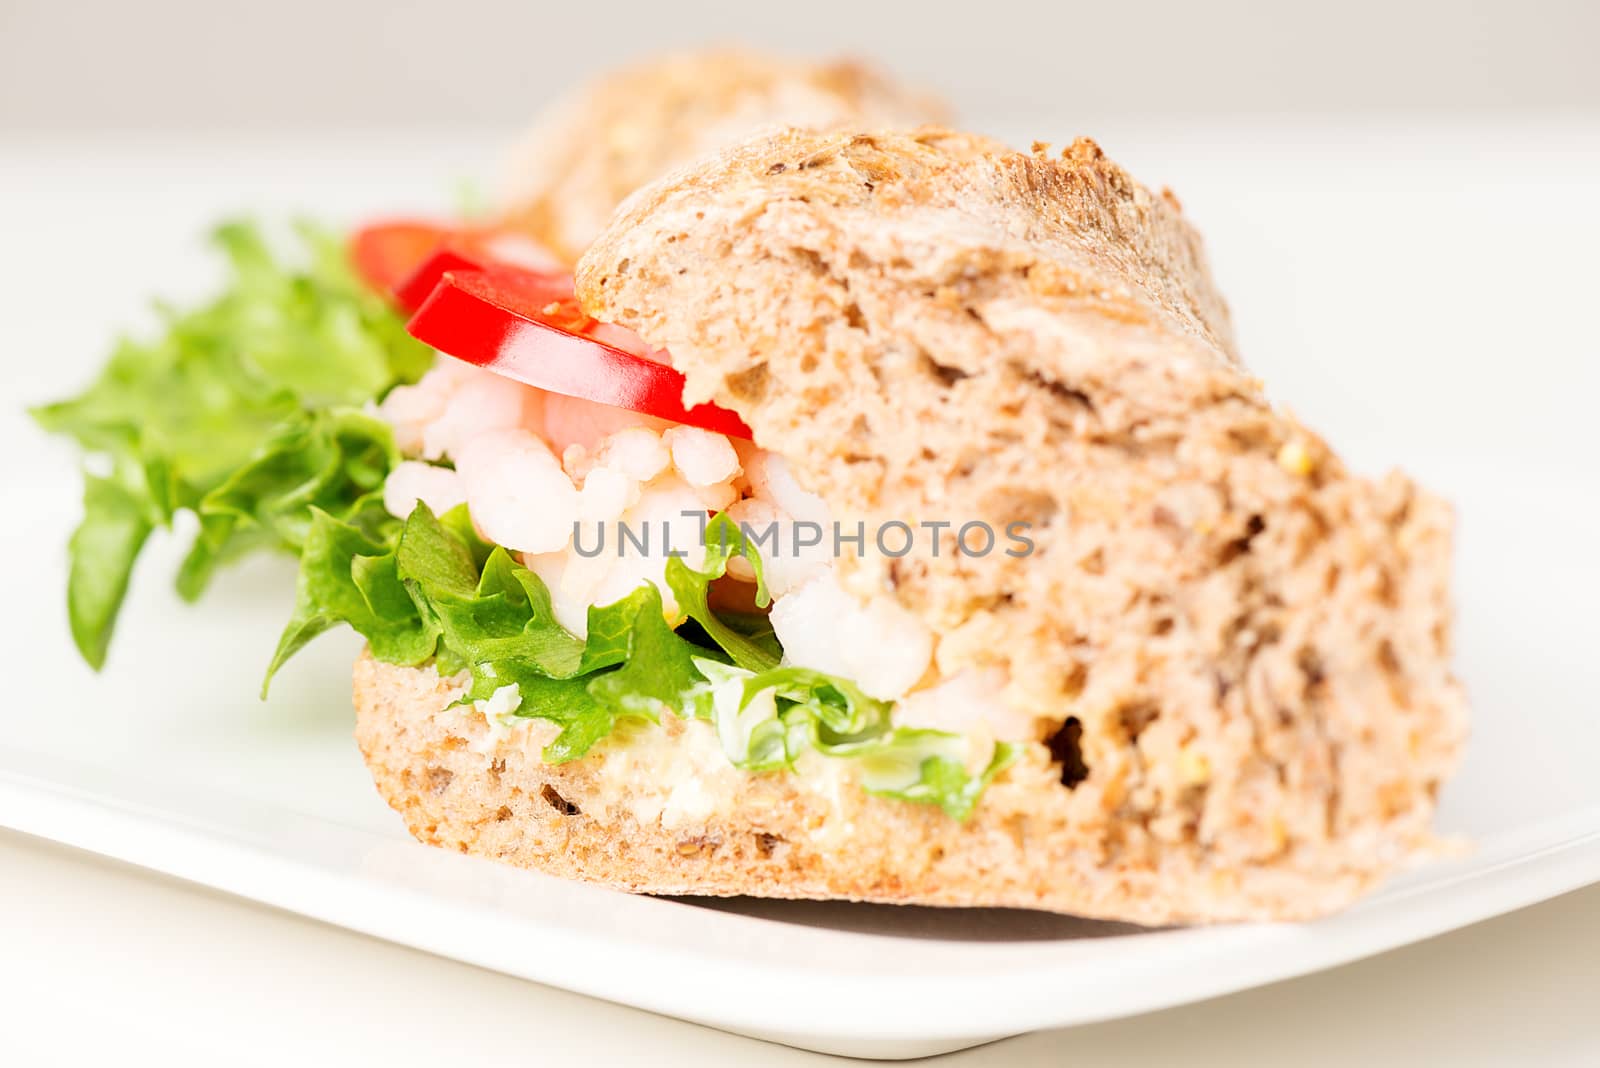 Prawn sandwich on white plate. Studio shot